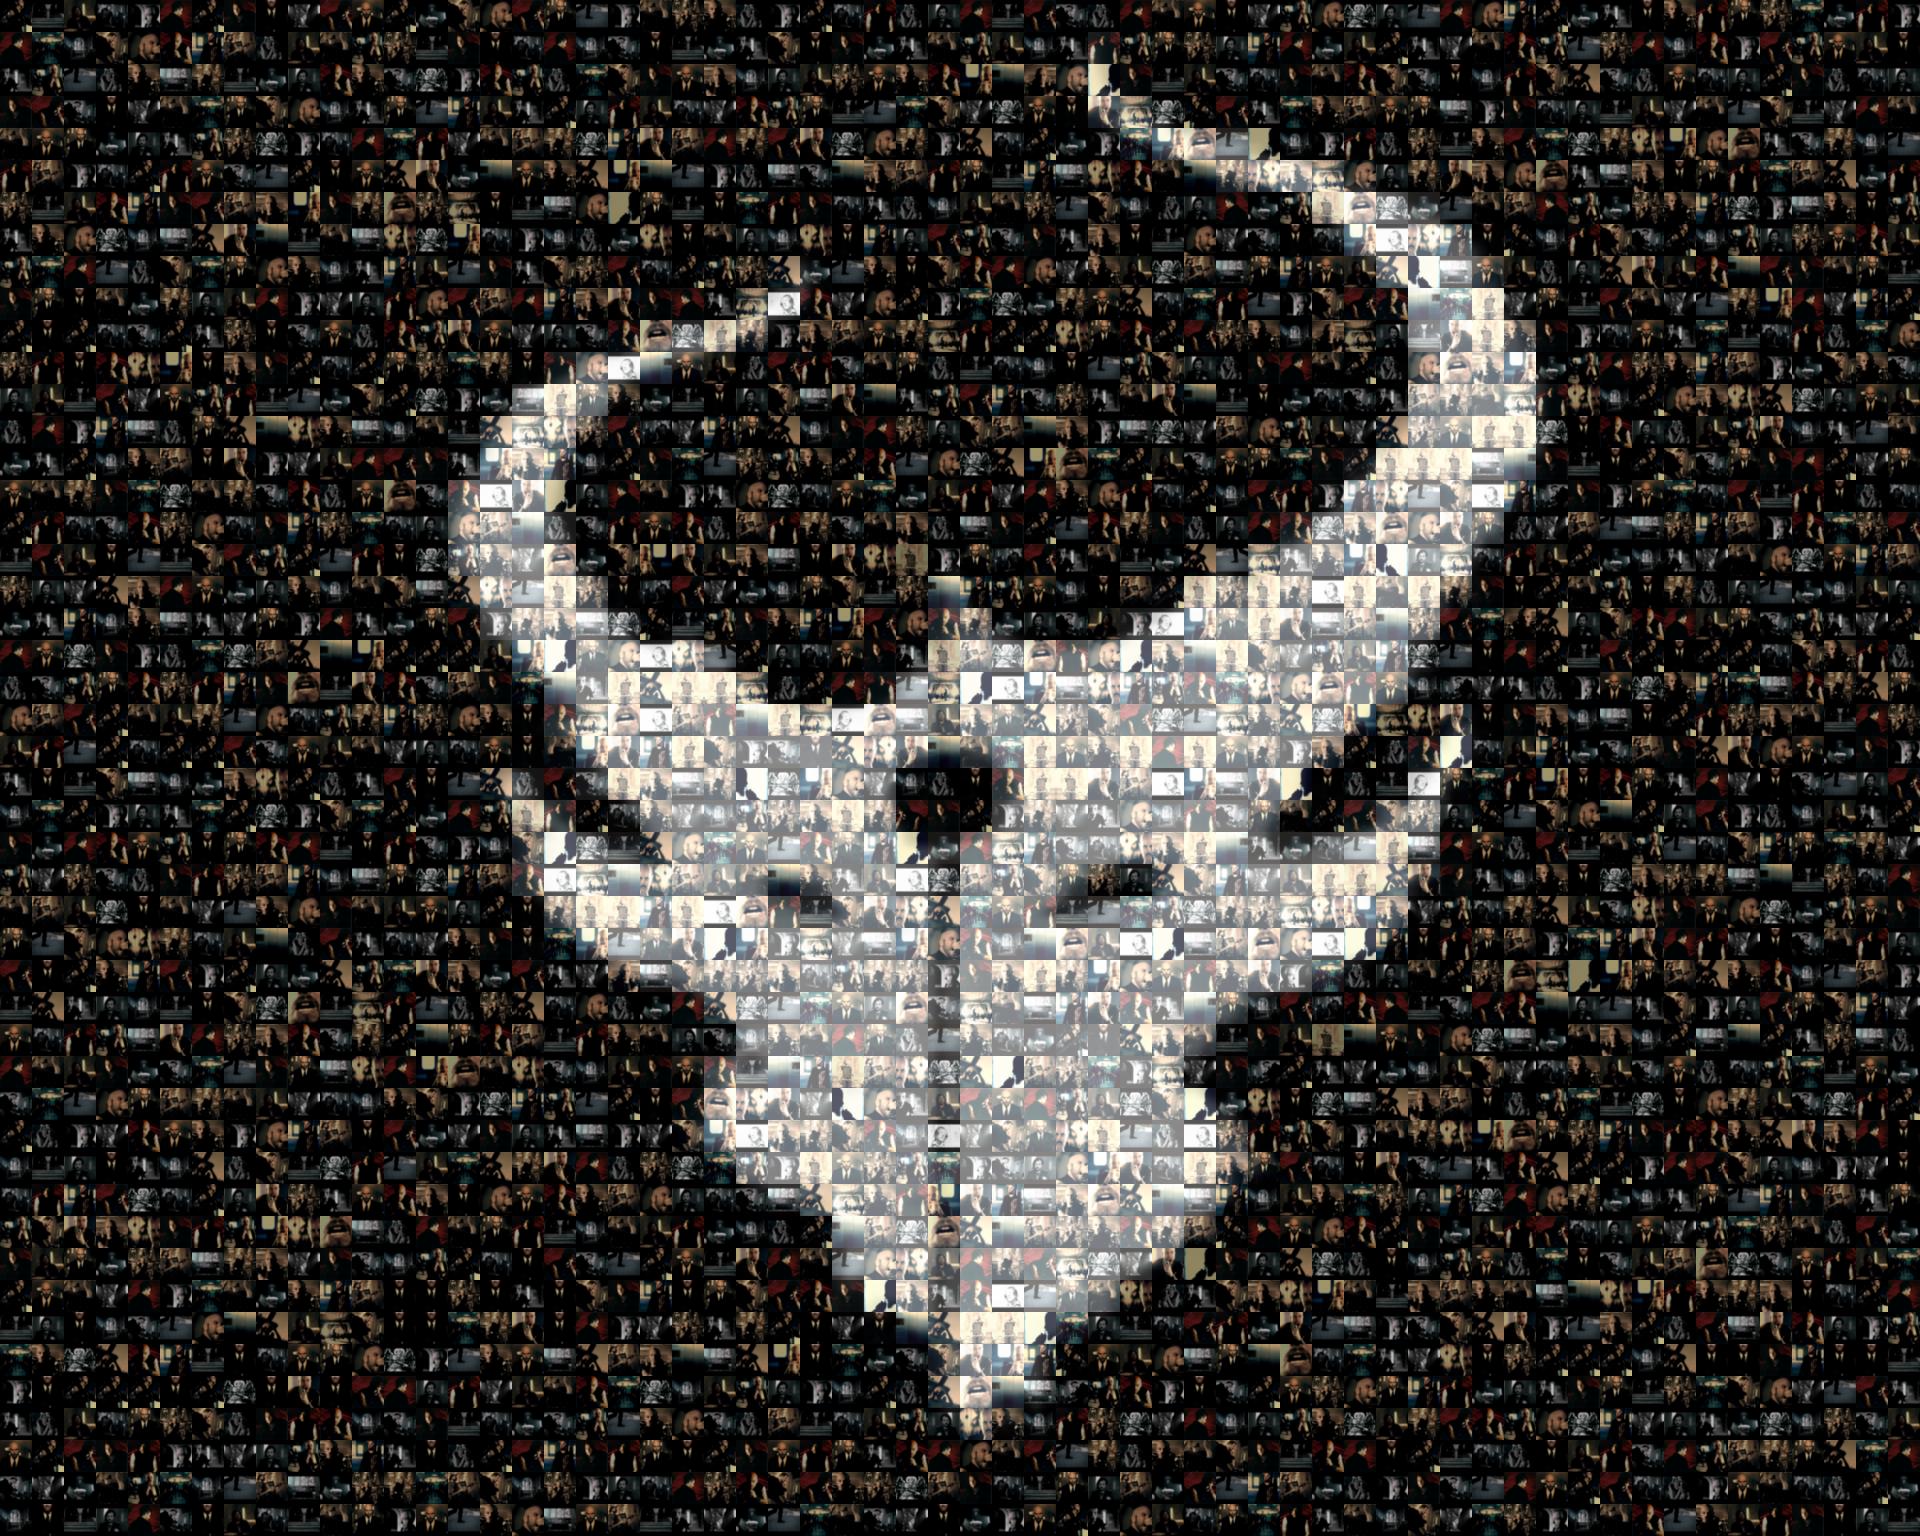 Demon Hunter Band Wallpaper Hd Demon hunter mosaic by